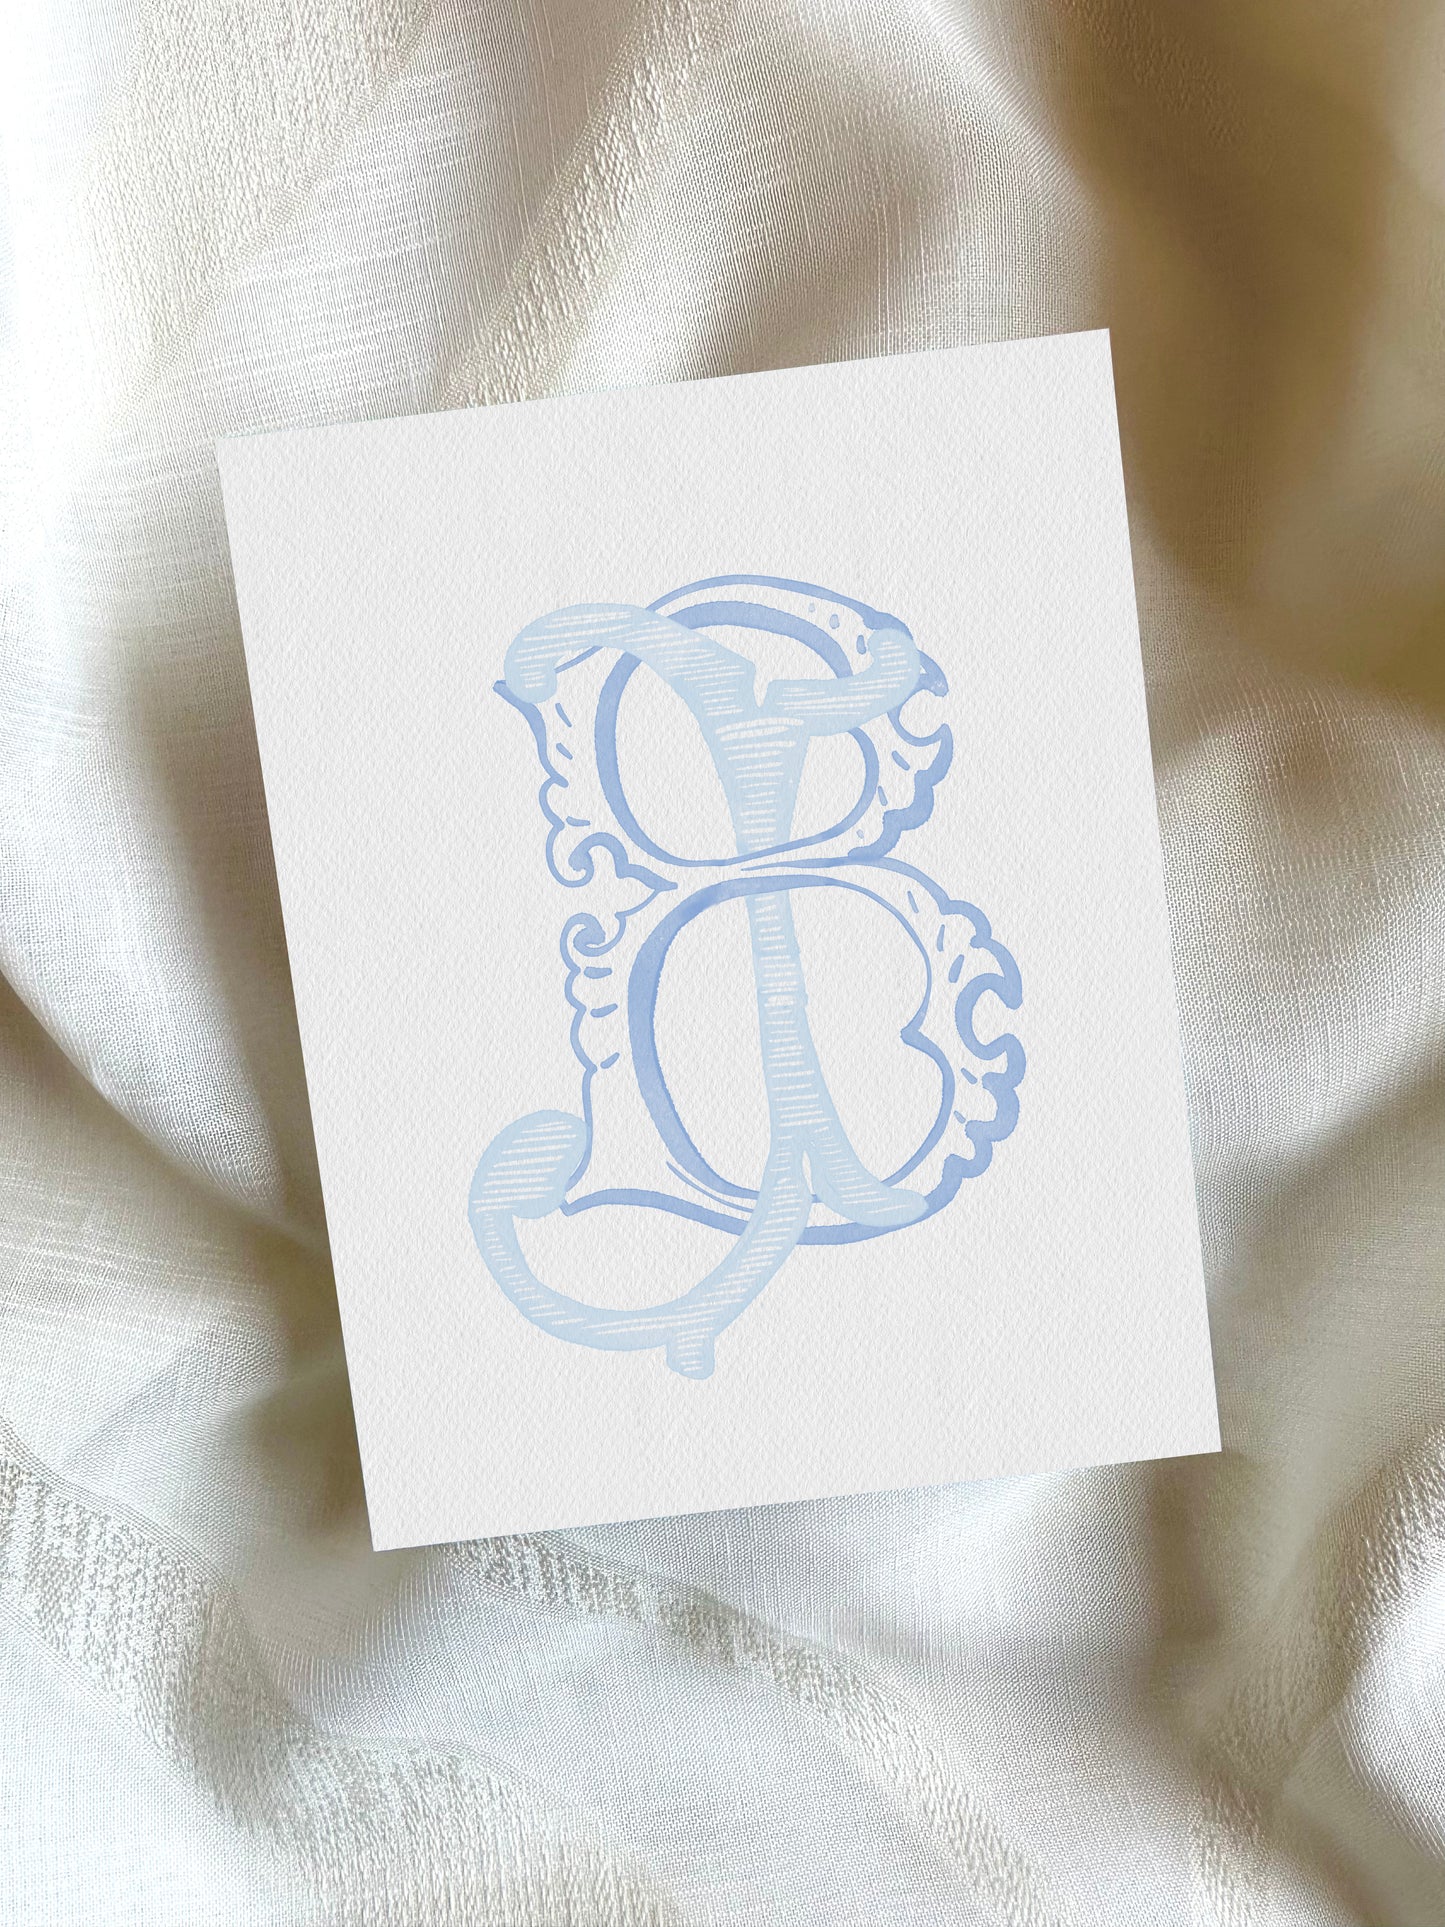 2 Letter Monogram with Letters BJ JB | Digital Download - Wedding Monogram SVG, Personal Logo, Wedding Logo for Wedding Invitations